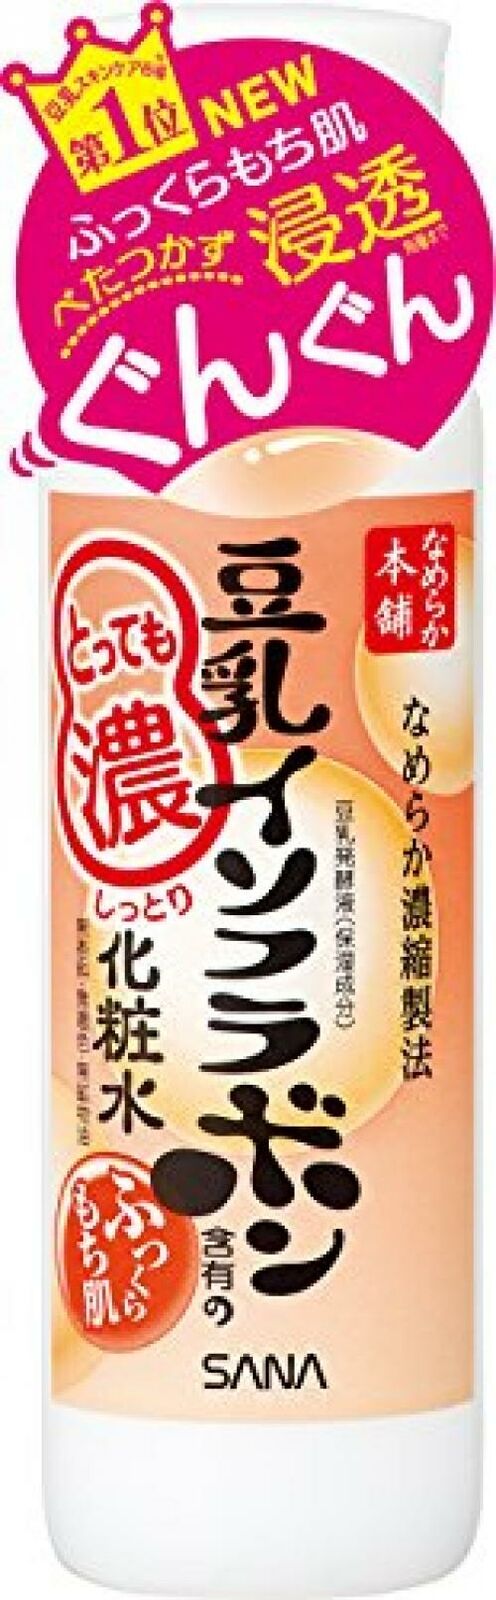 Sana, Nameraka Brand Isoflavone Lotion Super Moisture (FACE COSME LOTION) 200ml  異黃酮乳液超級保濕 (面部化妝水)